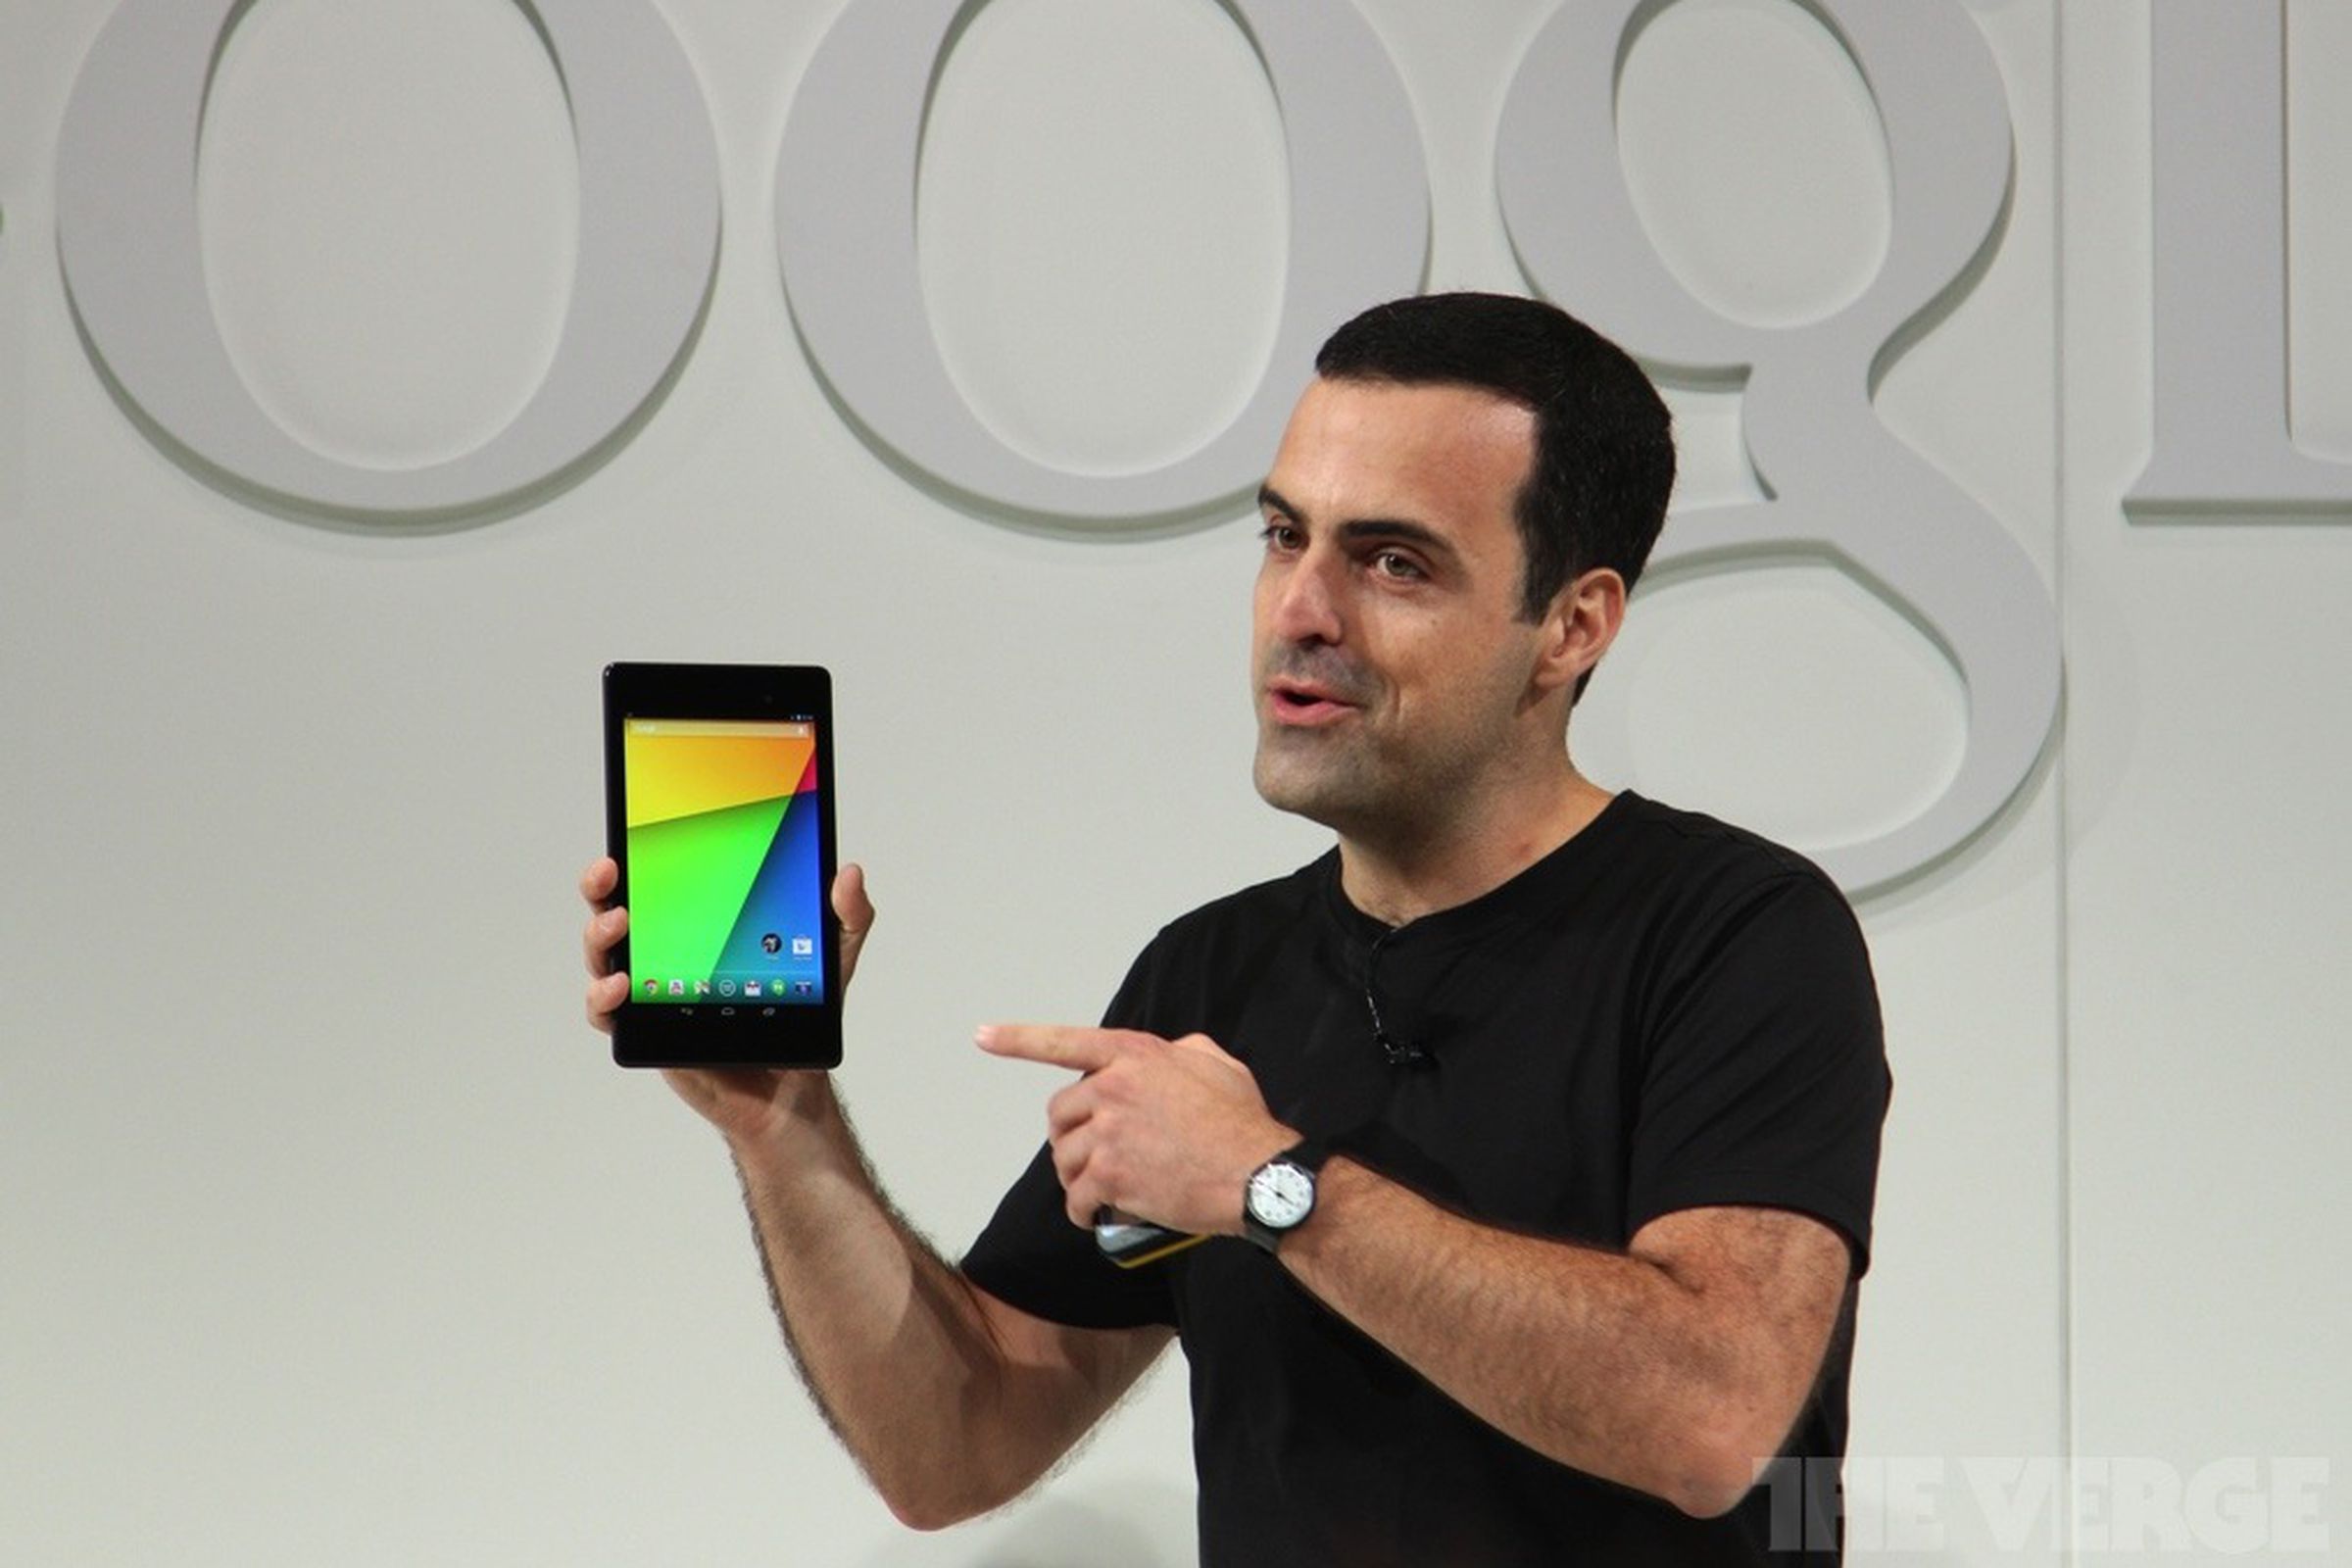 Google Hugo Barra Nexus 7 stock 1020 2-3